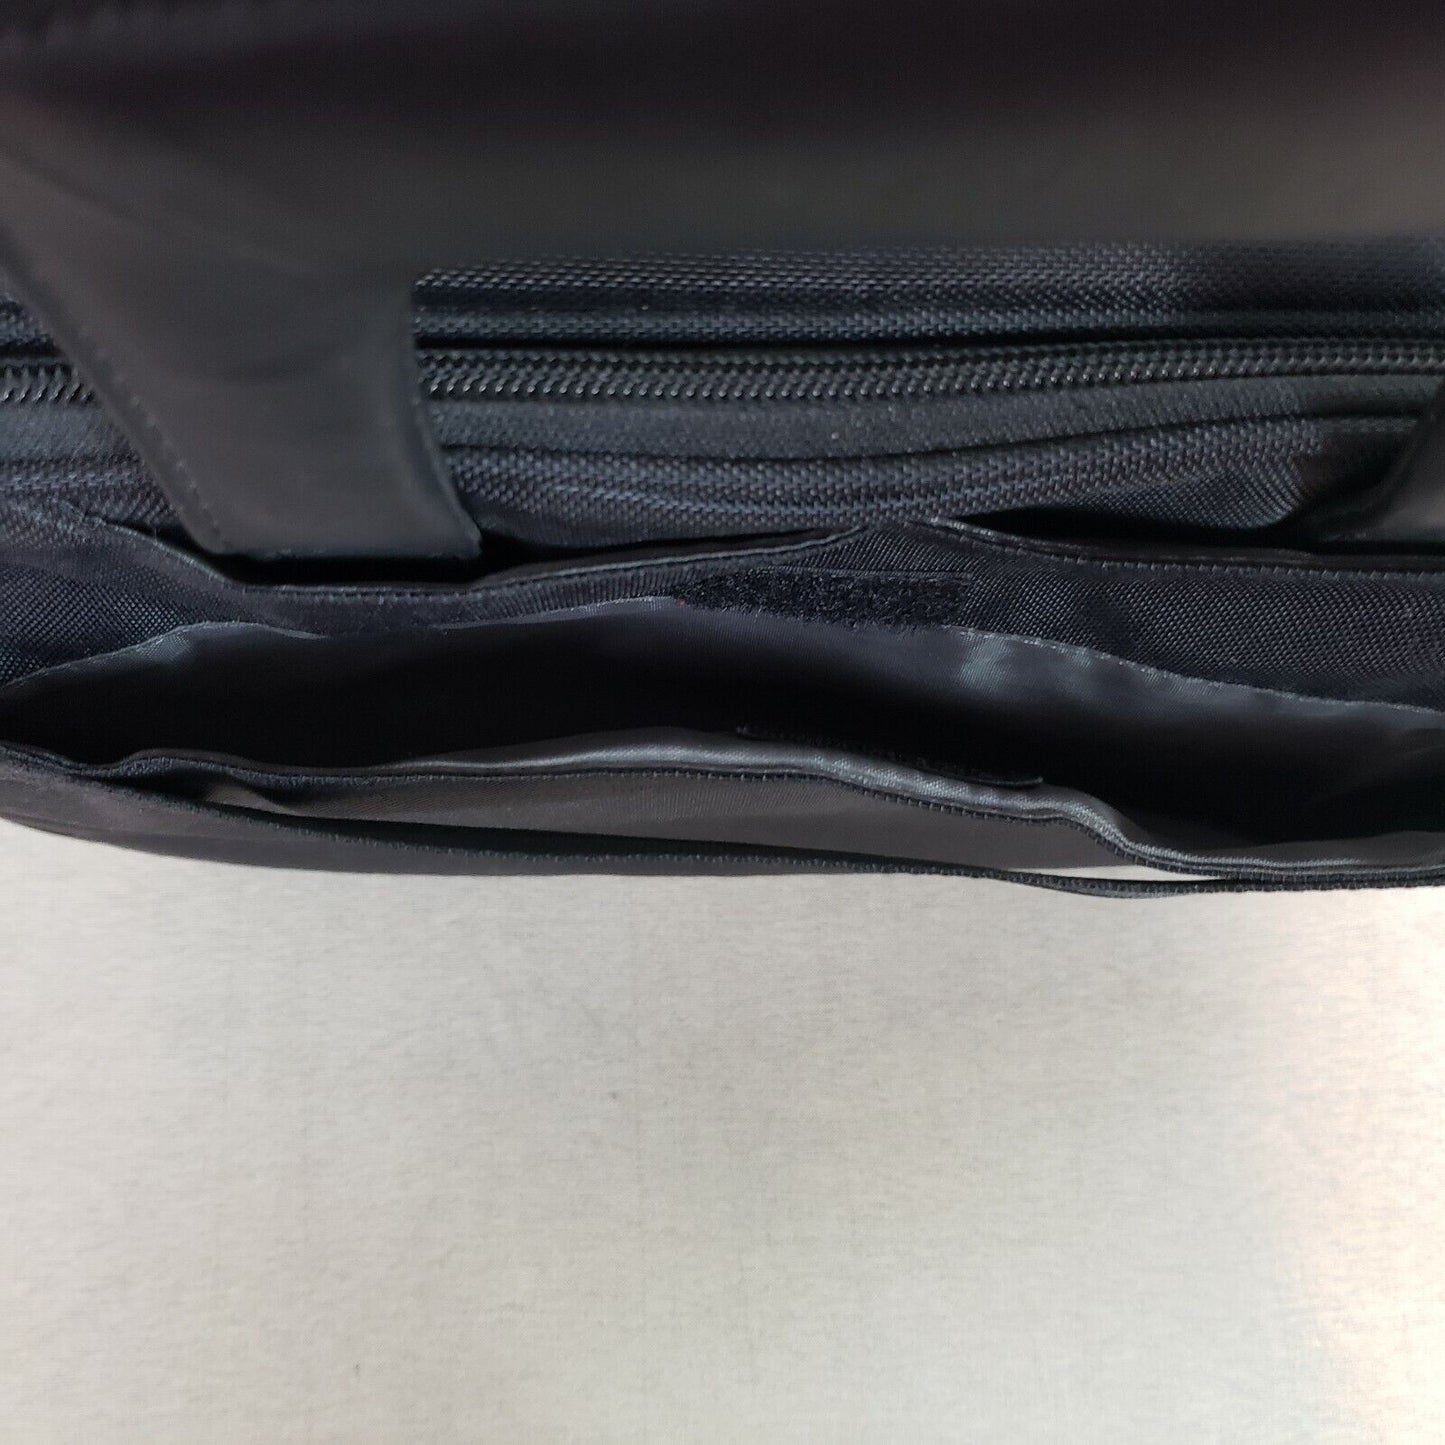 Dell Laptop Bag Nylon Shoulder Strap 12-14" compartments Zip Professional Travel